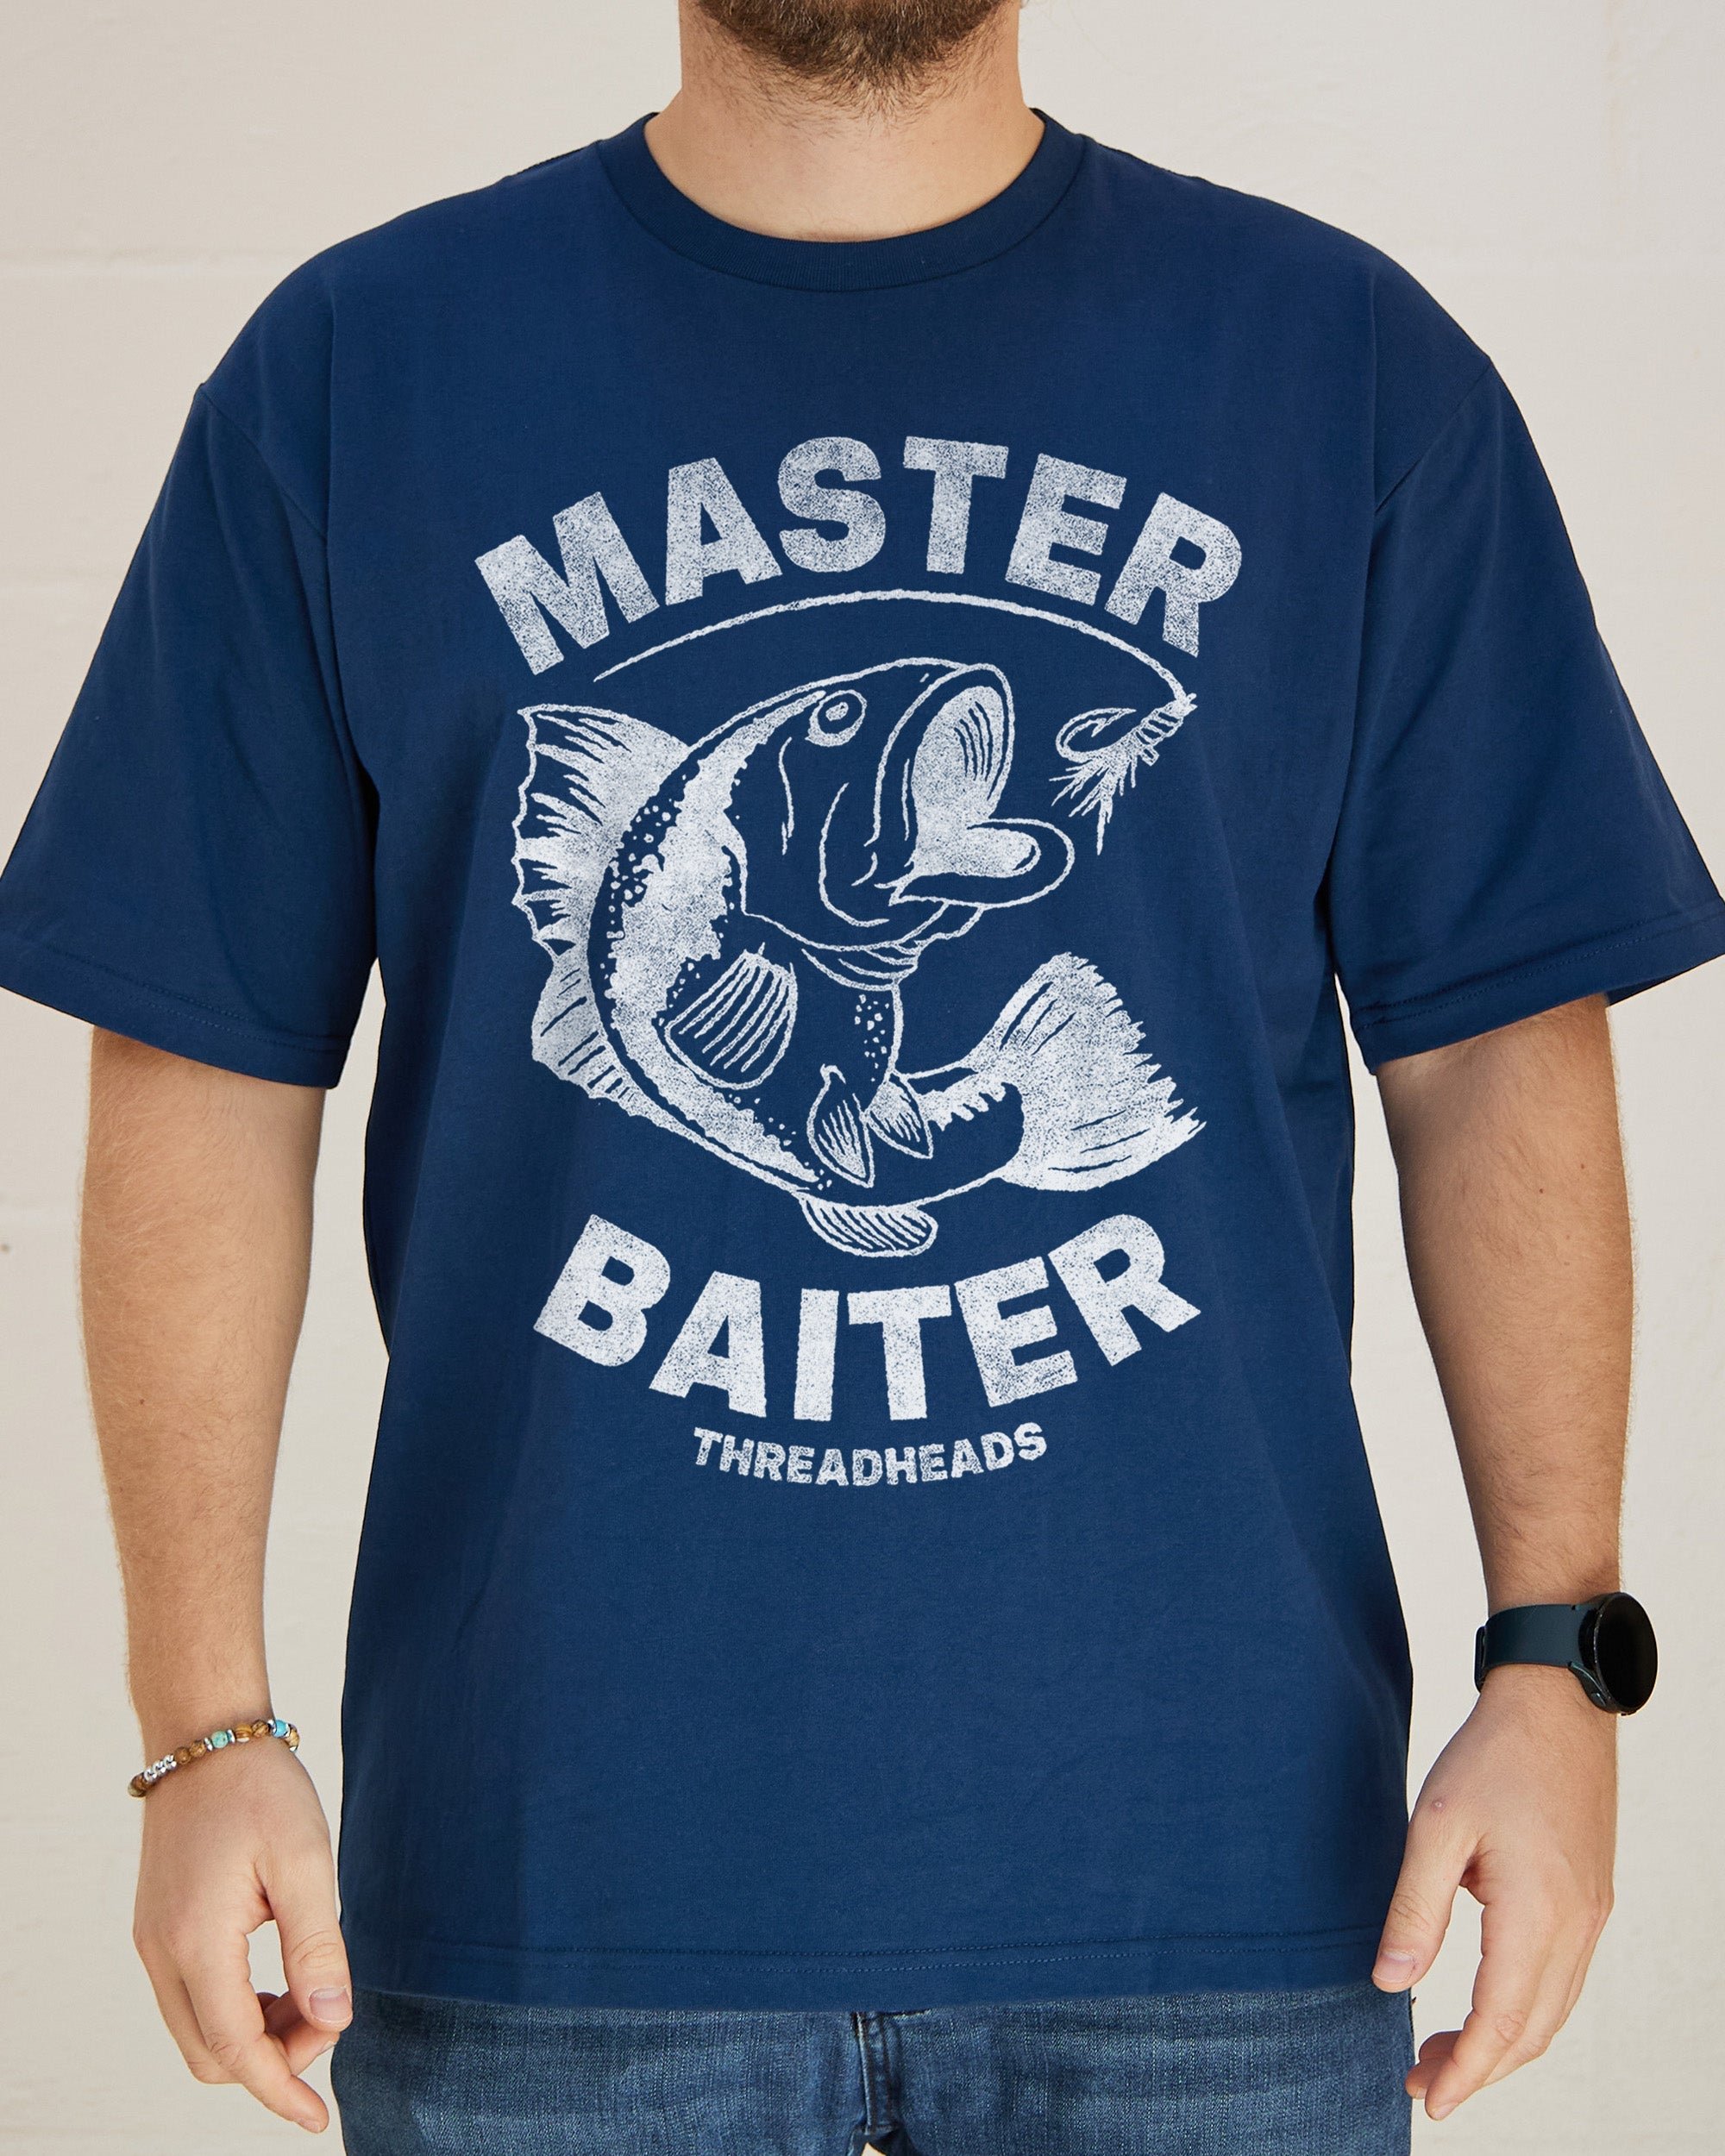 The Ultimate Master Baiter Shirt Guide